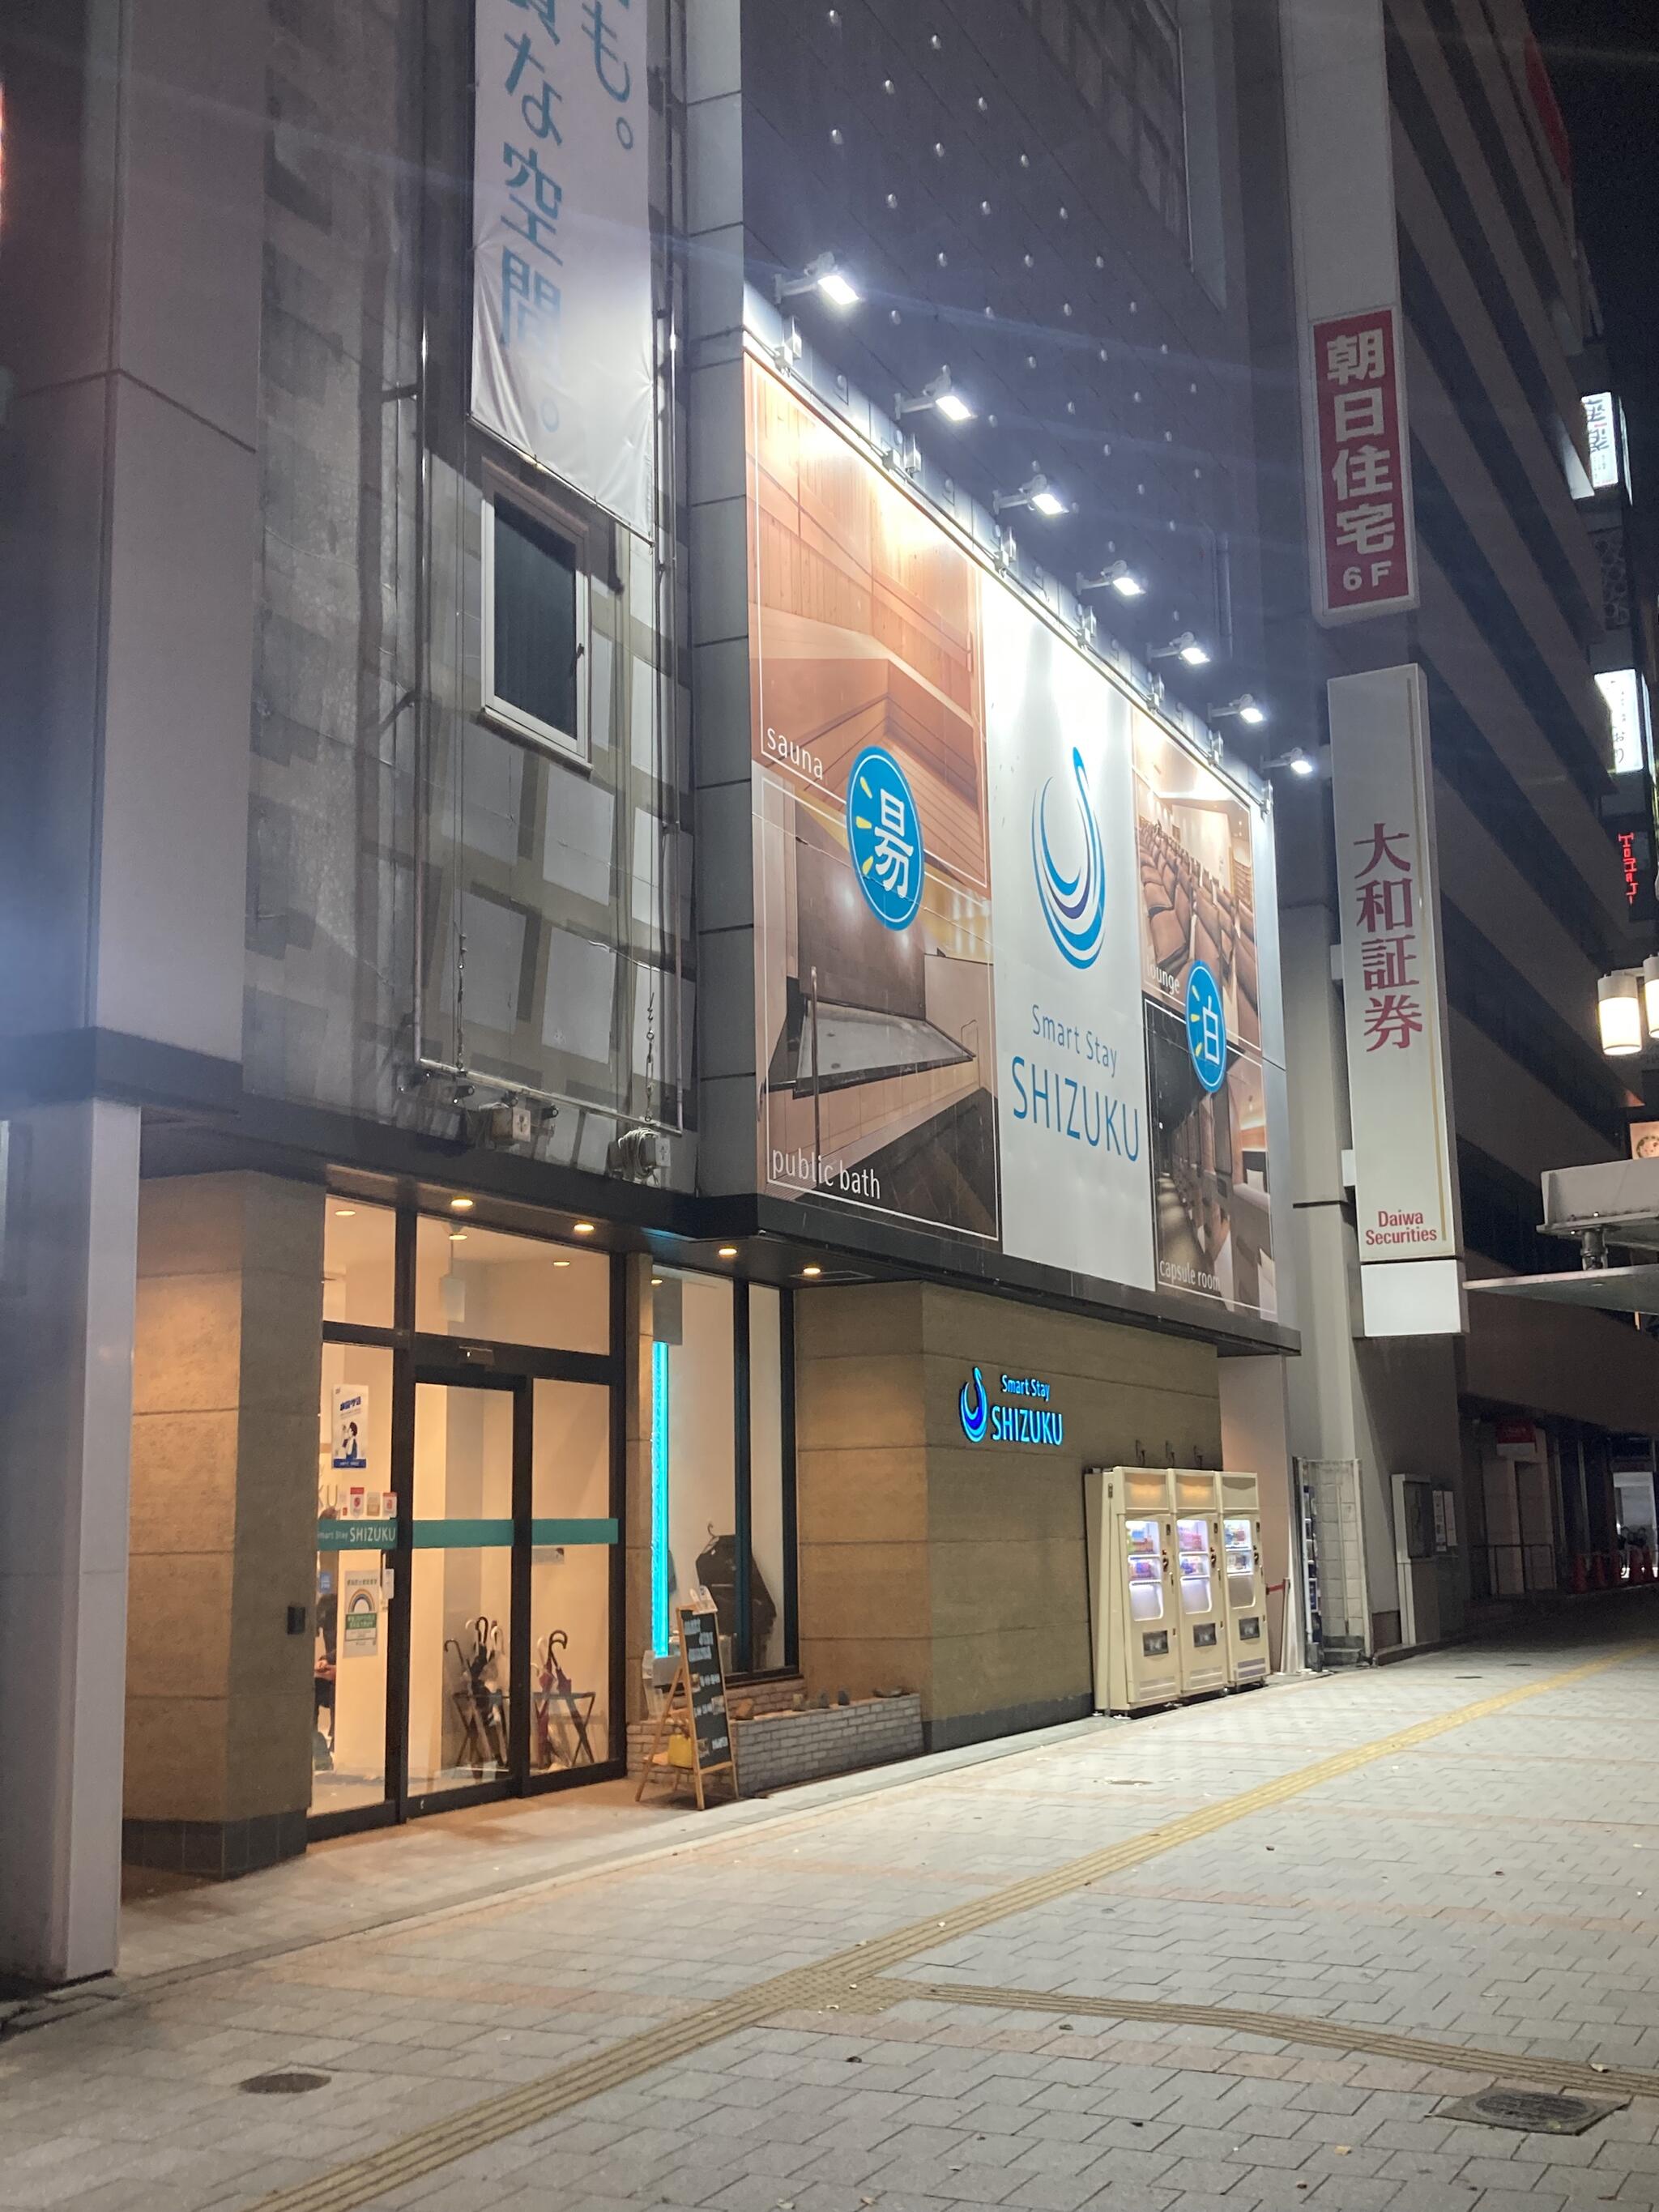 Smart Stay SHIZUKU 上野駅前の代表写真6